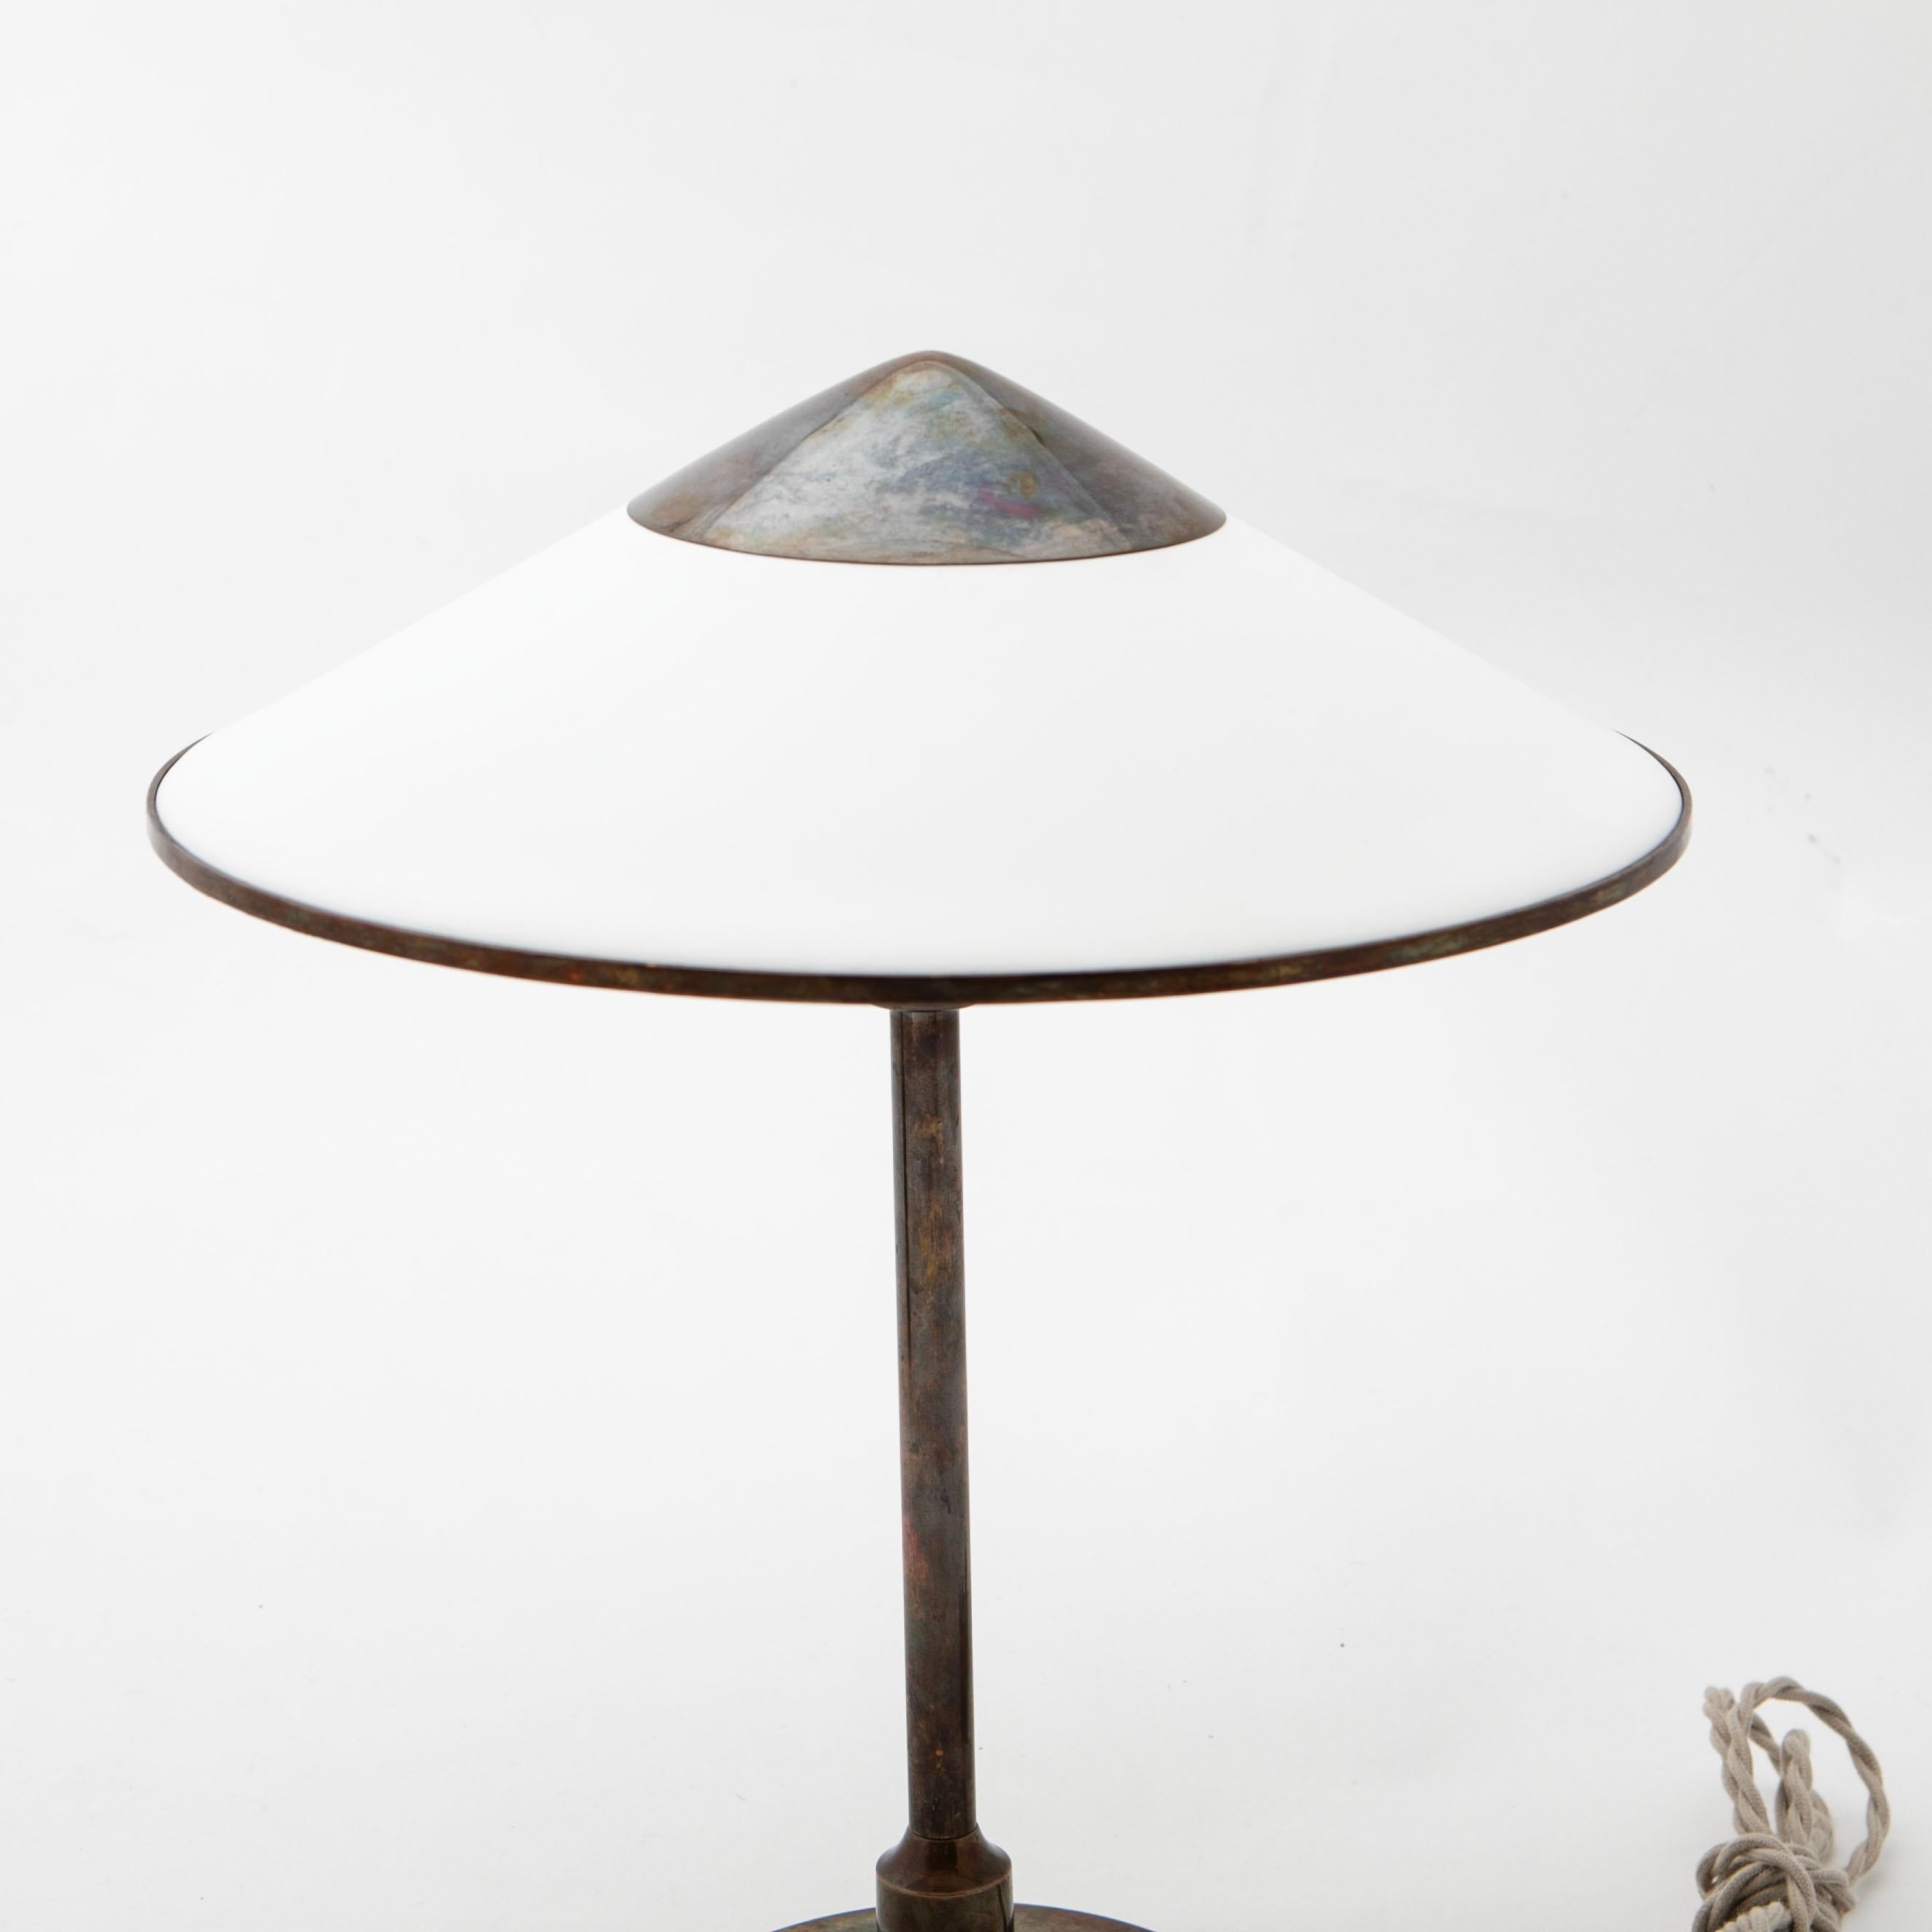 Niels Rasmussen Thykier (Danish, 1883 - 1978).
Table lamp model 